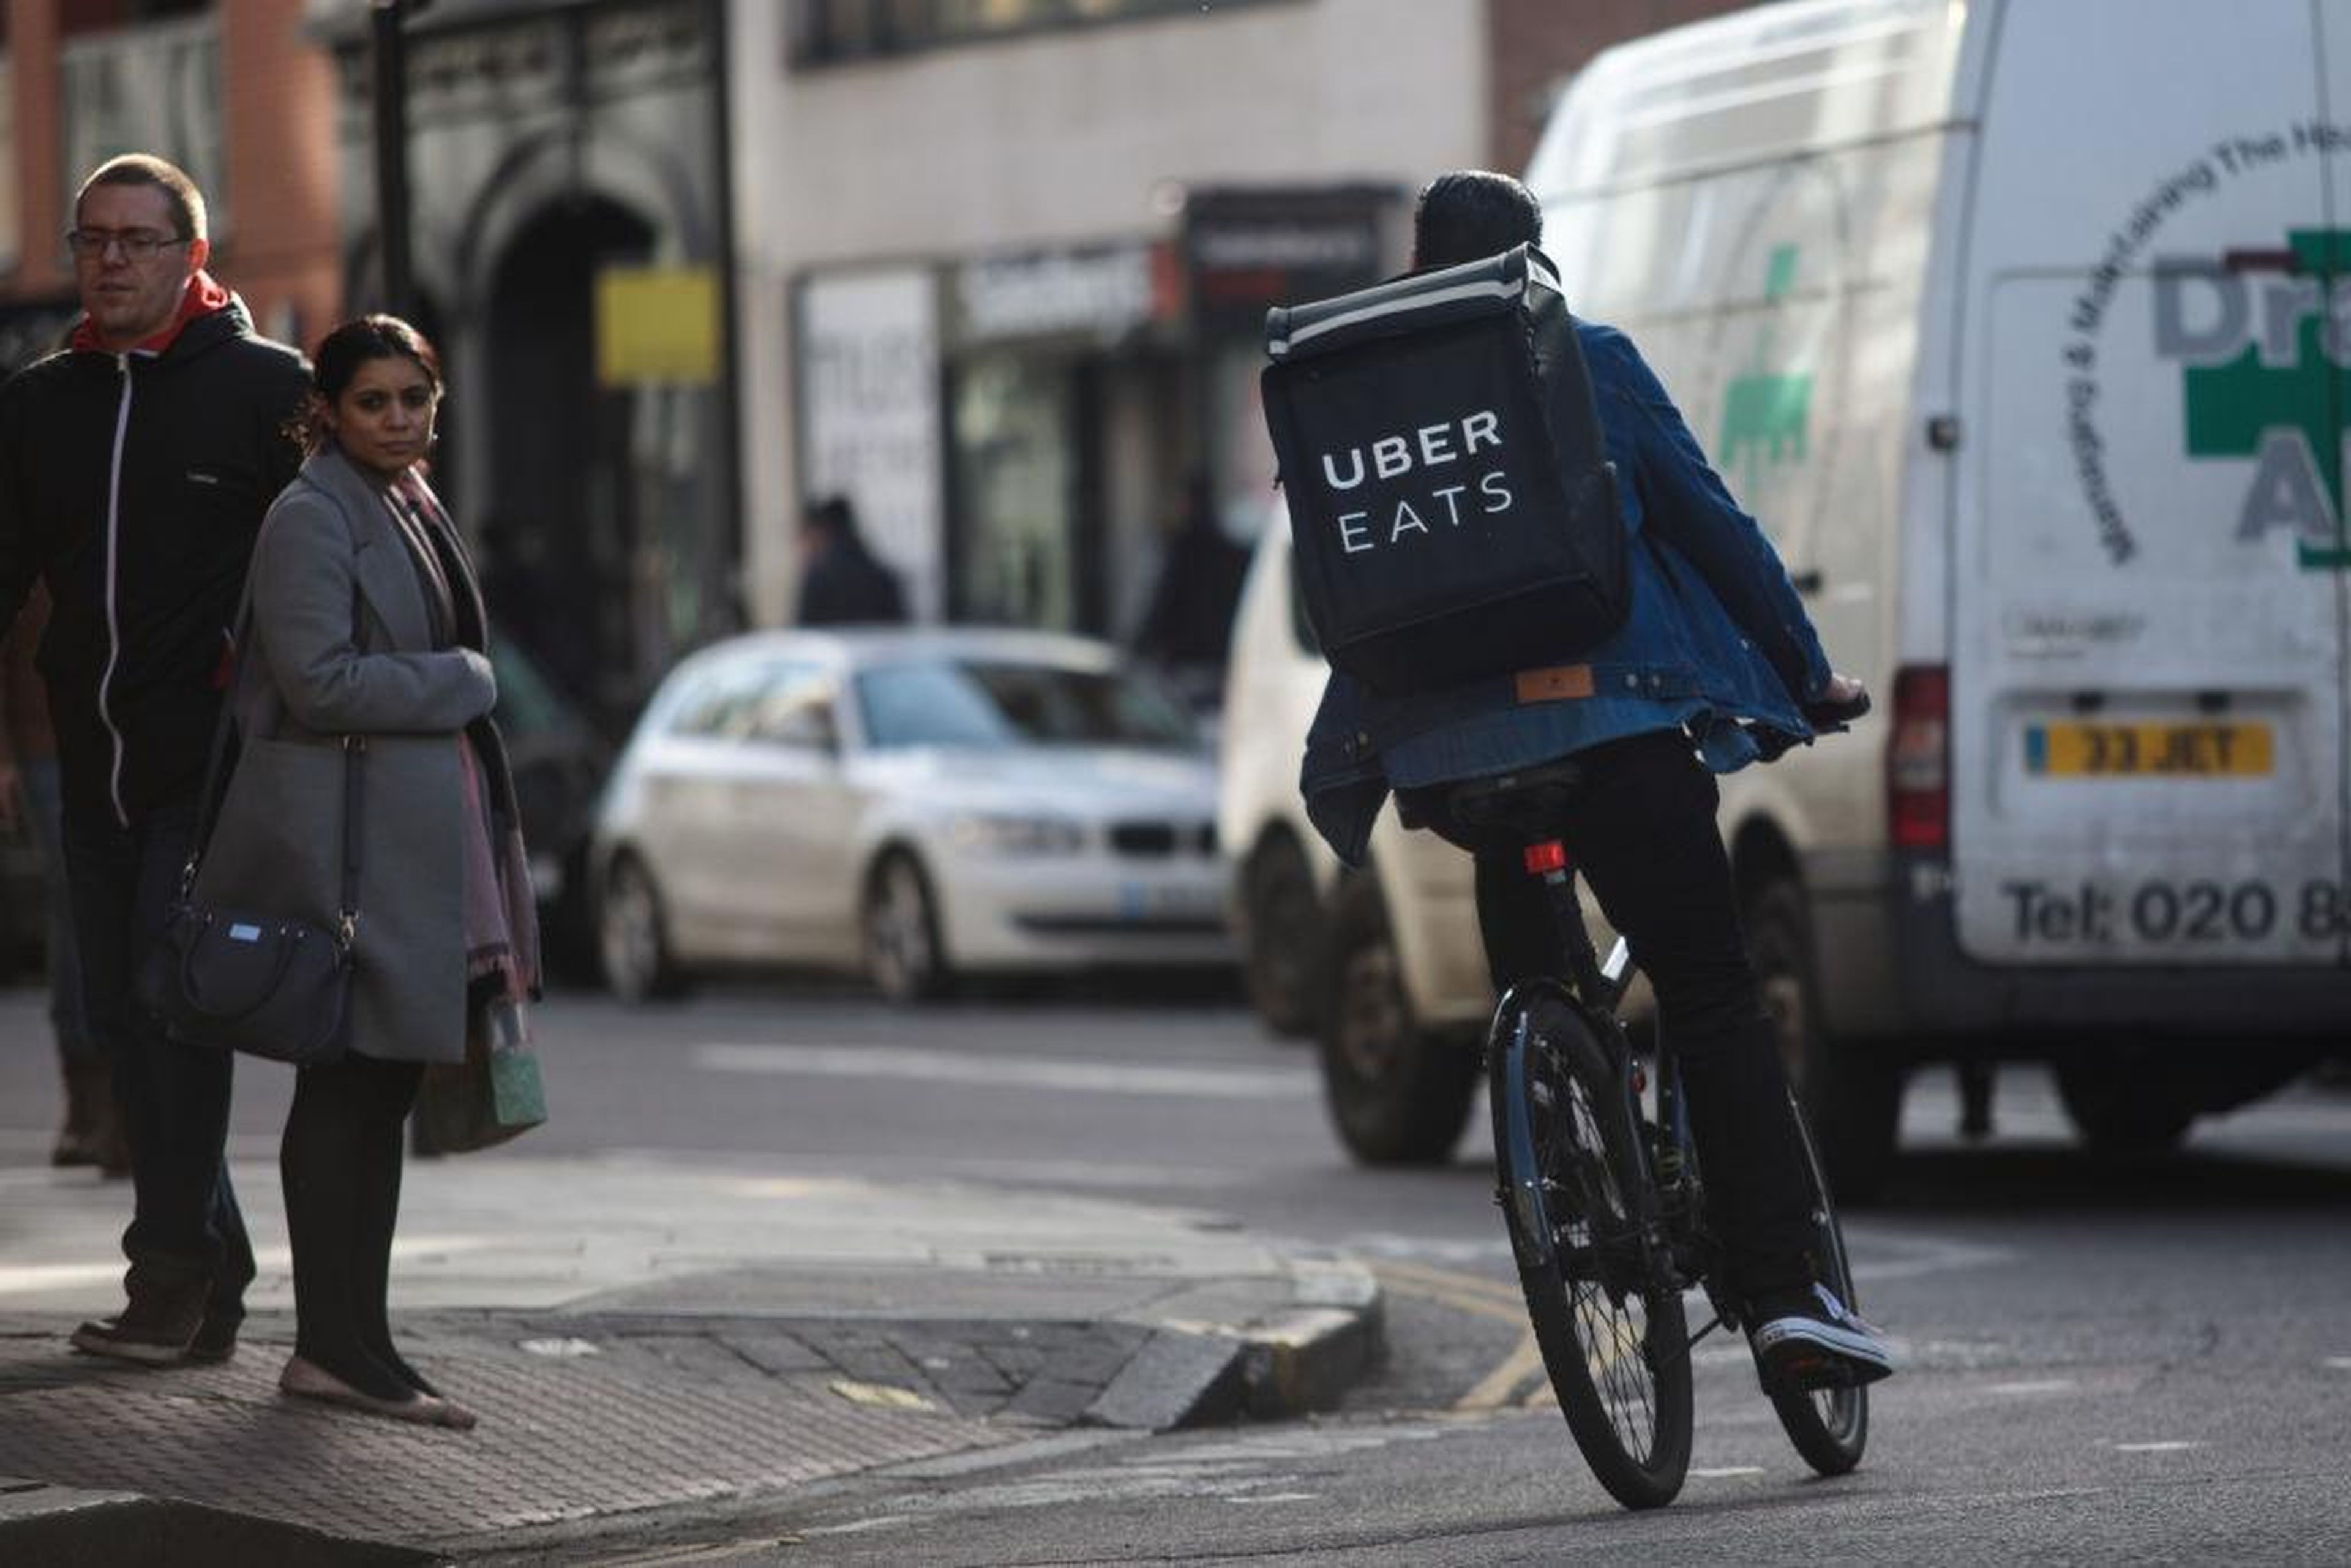 An Uber Eats rider cycles through central London.